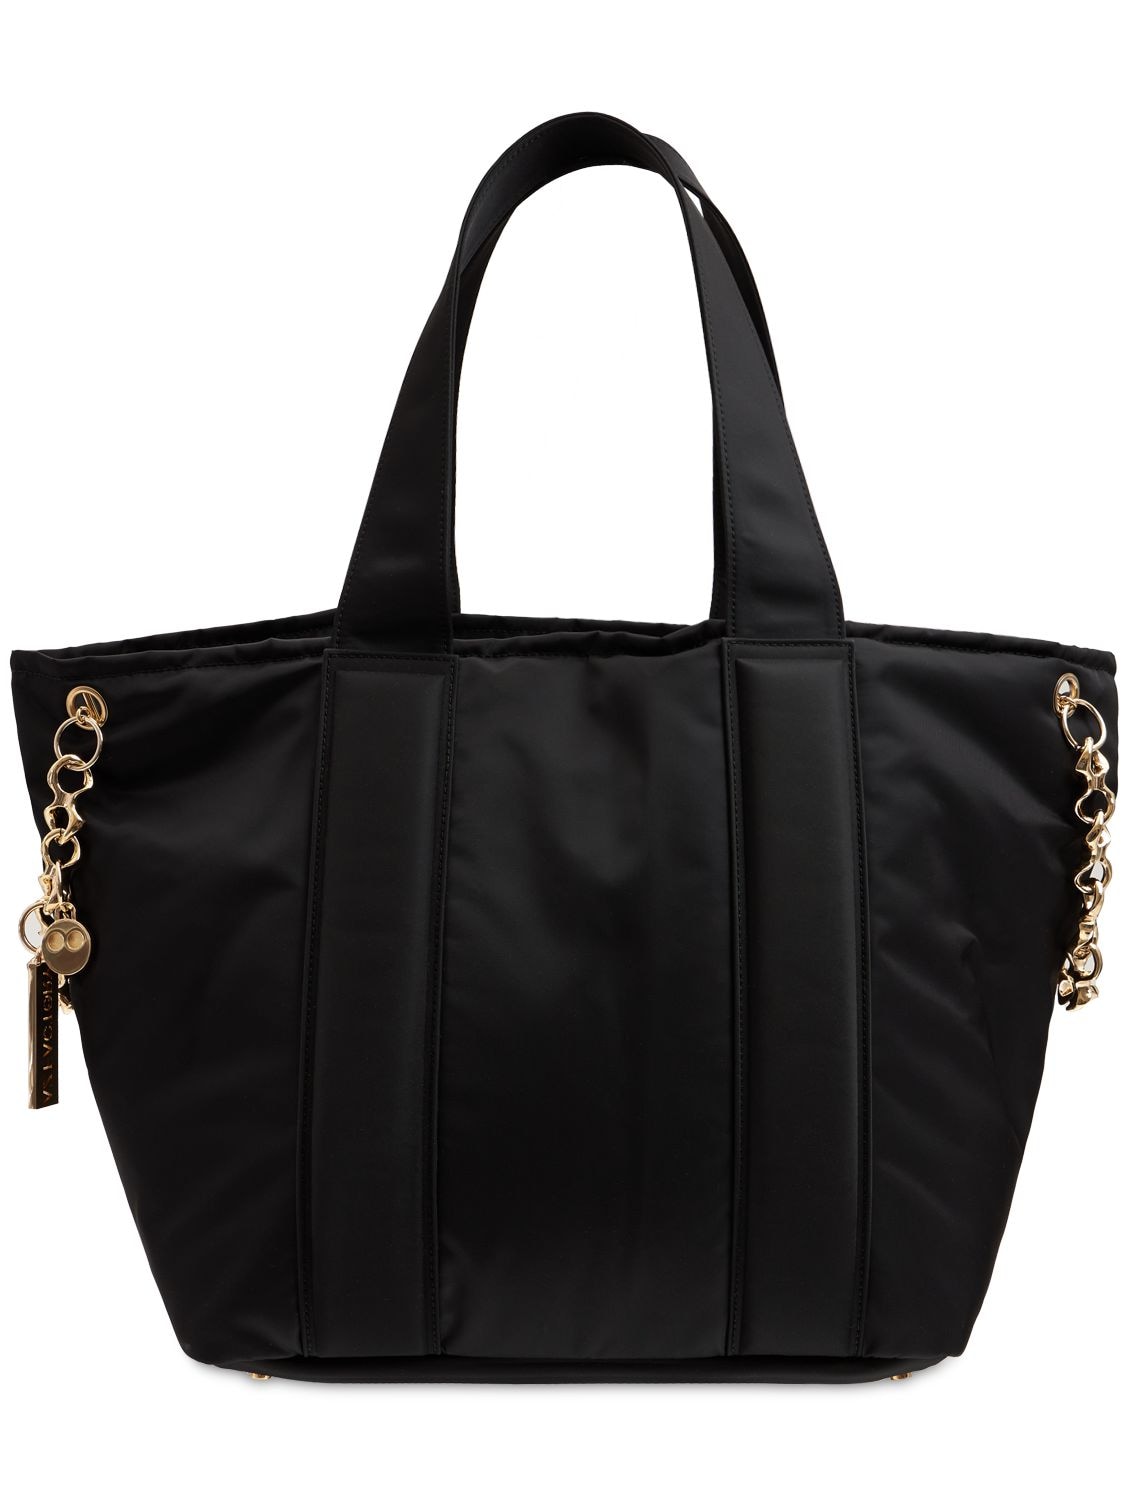 The Shopper Nylon Tote Bag